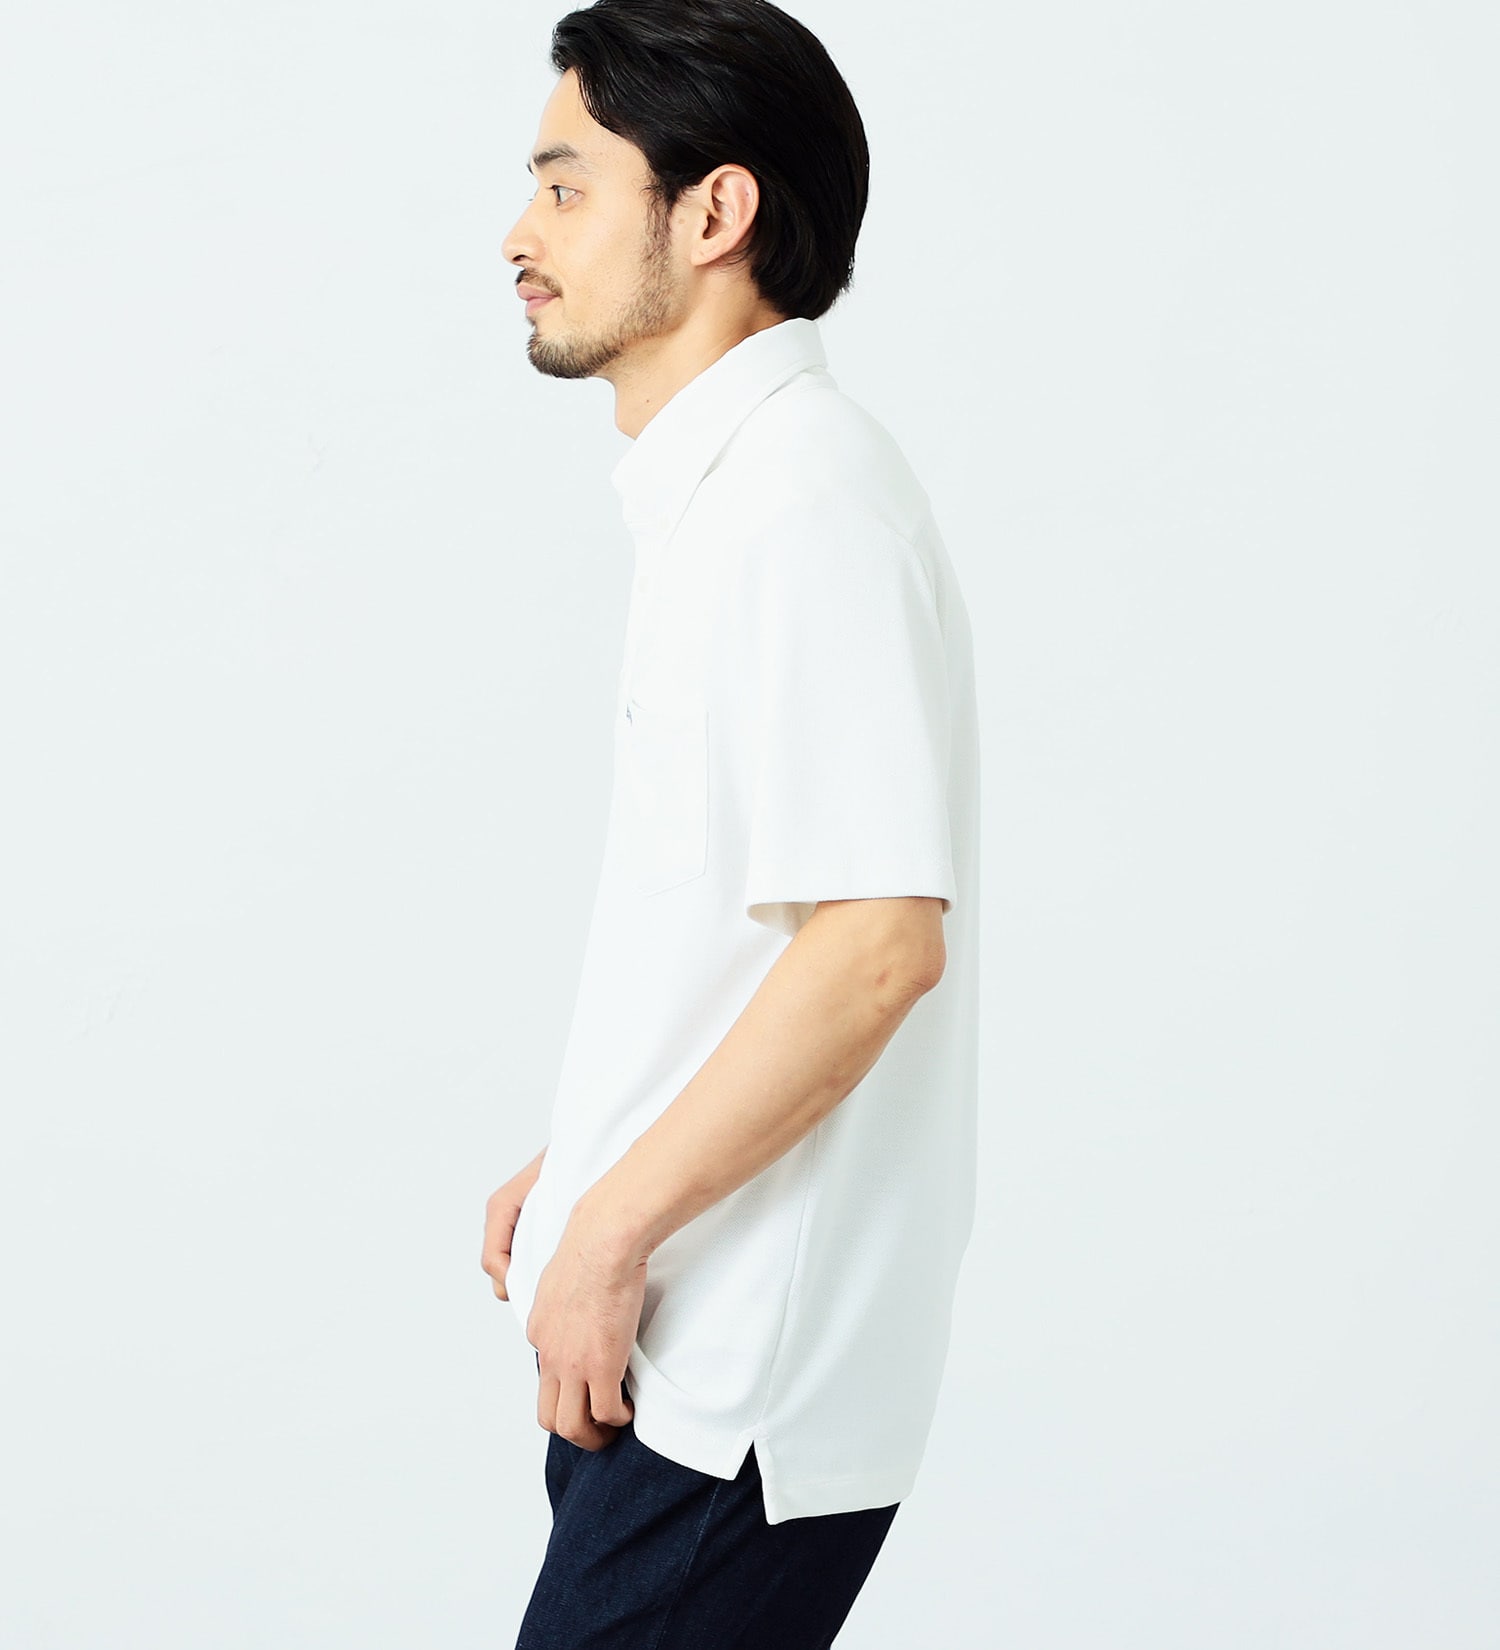 EDWIN(エドウイン)の【サマーセール】COOL FLEX ポロシャツ（半袖）|トップス/ポロシャツ/メンズ|ホワイト